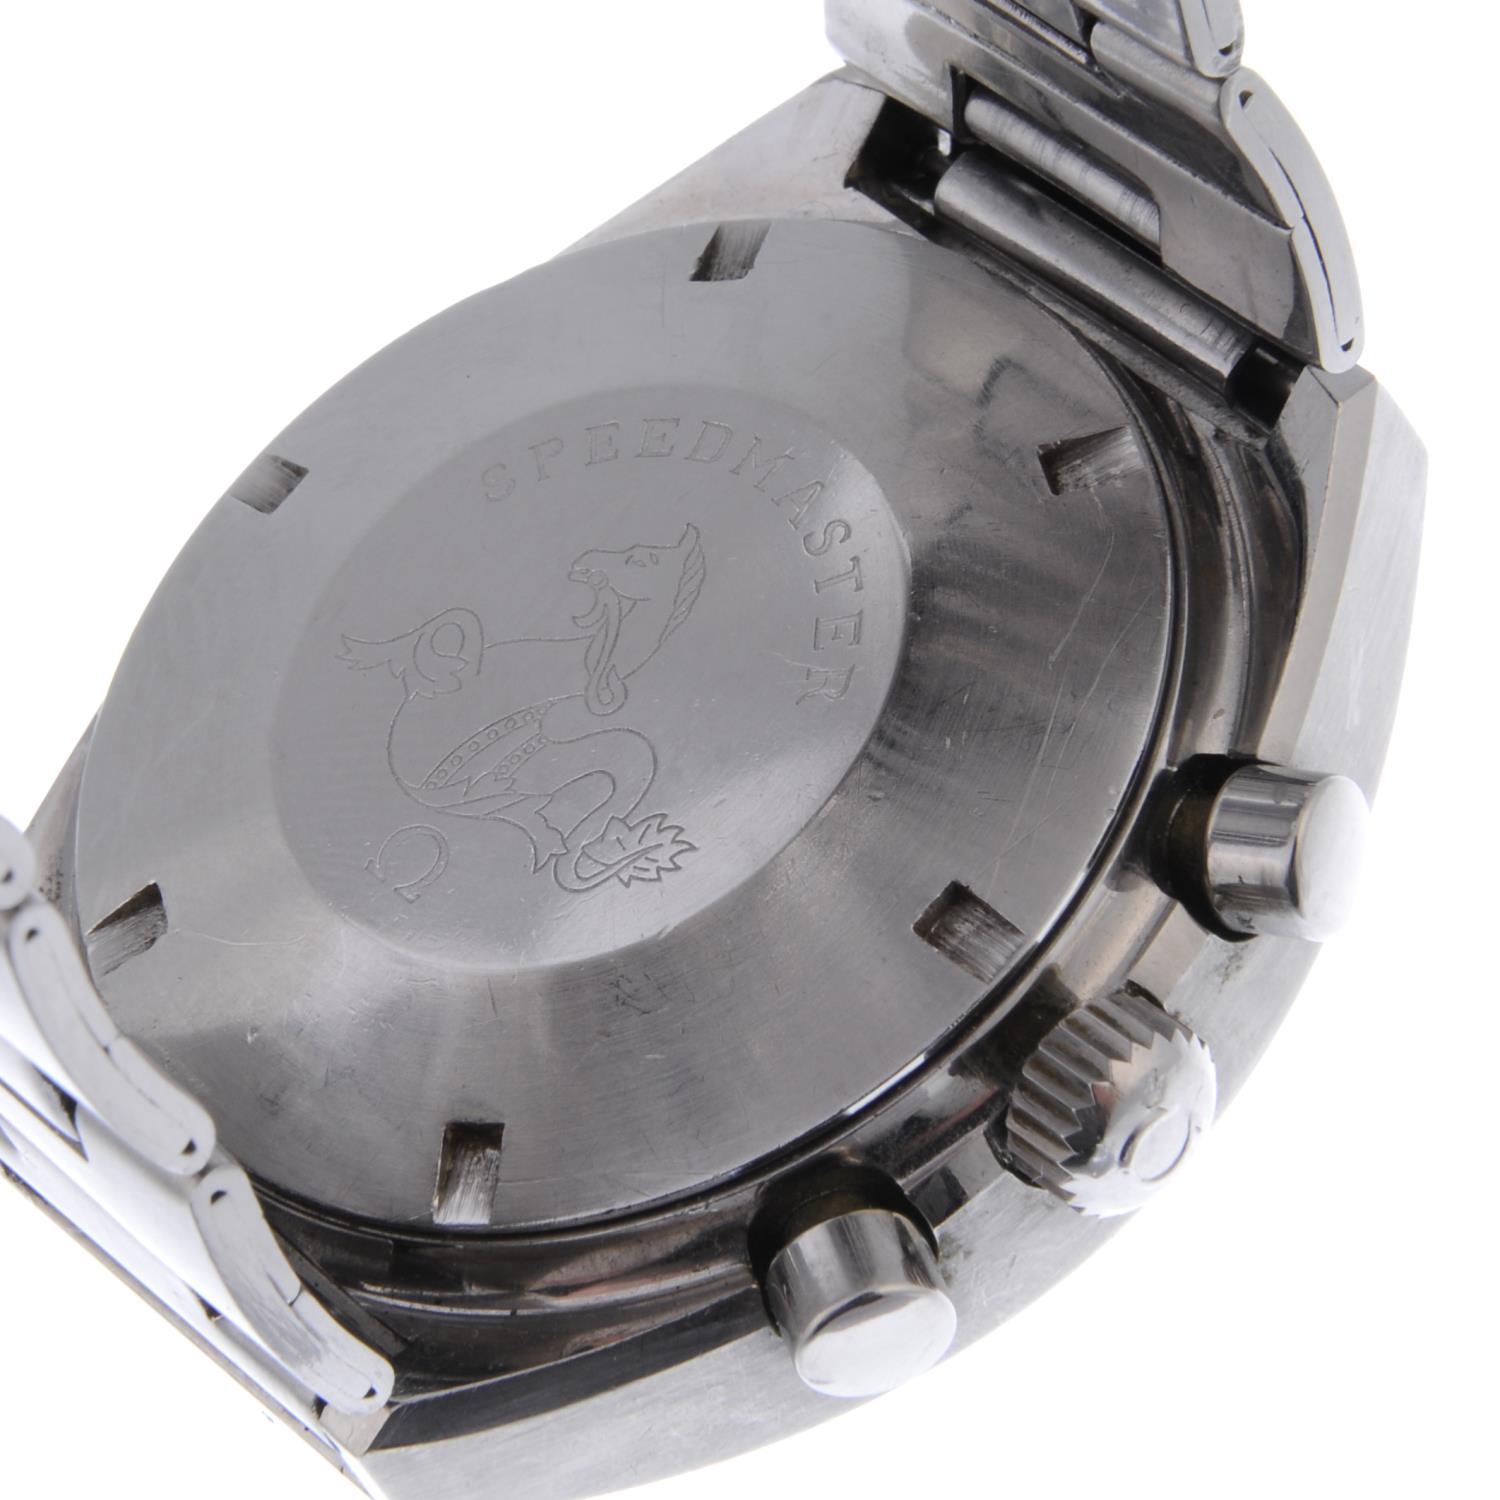 OMEGA - a gentleman's Speedmaster Mk II chronograph bracelet watch. - Image 2 of 2